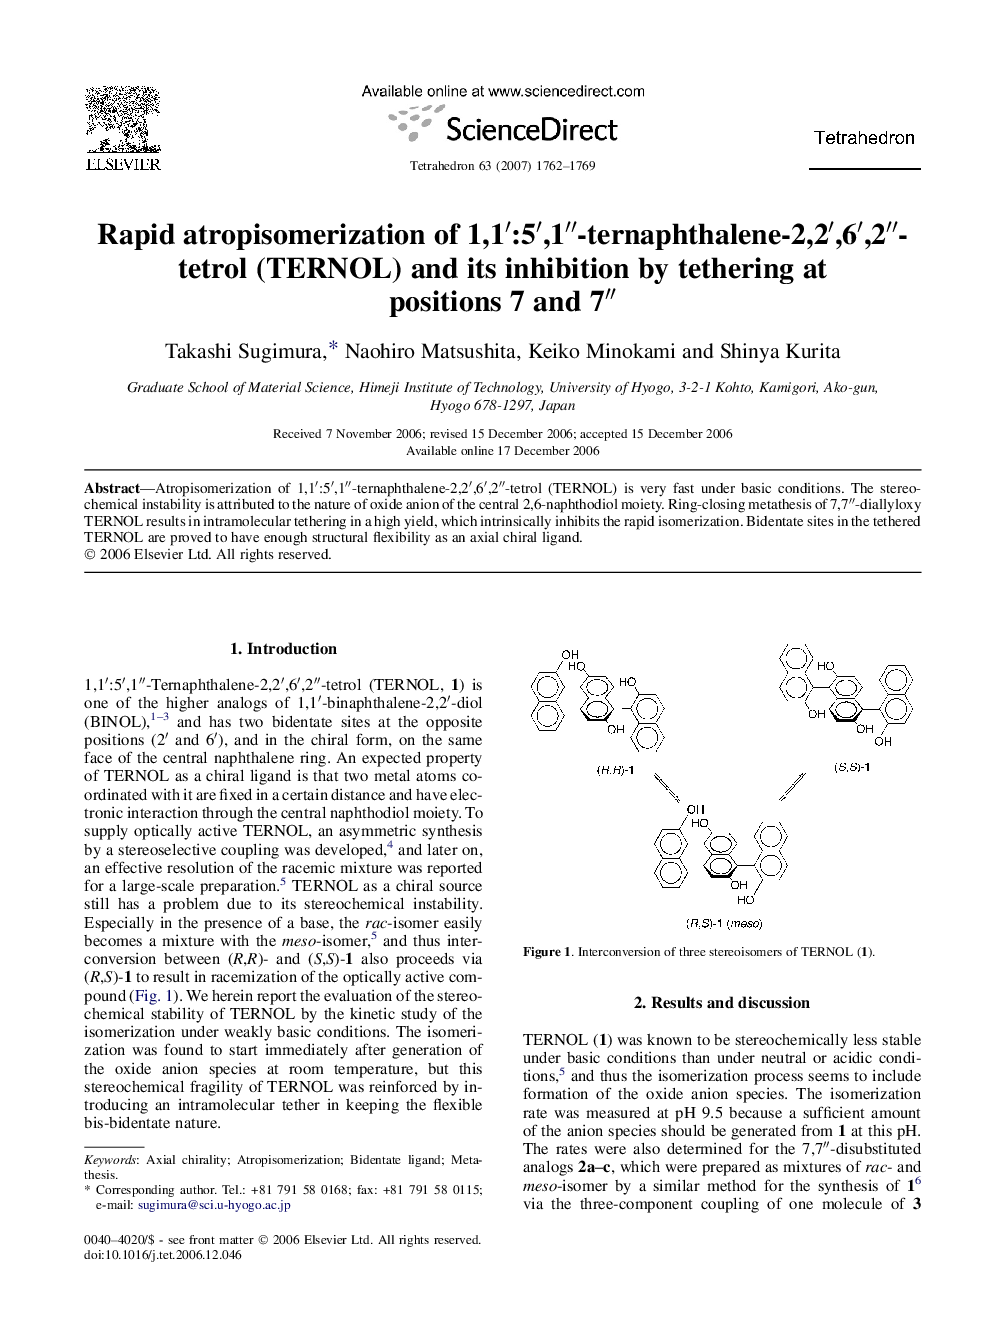 Rapid atropisomerization of 1,1â²:5â²,1â³-ternaphthalene-2,2â²,6â²,2â³-tetrol (TERNOL) and its inhibition by tethering at positions 7 and 7â³